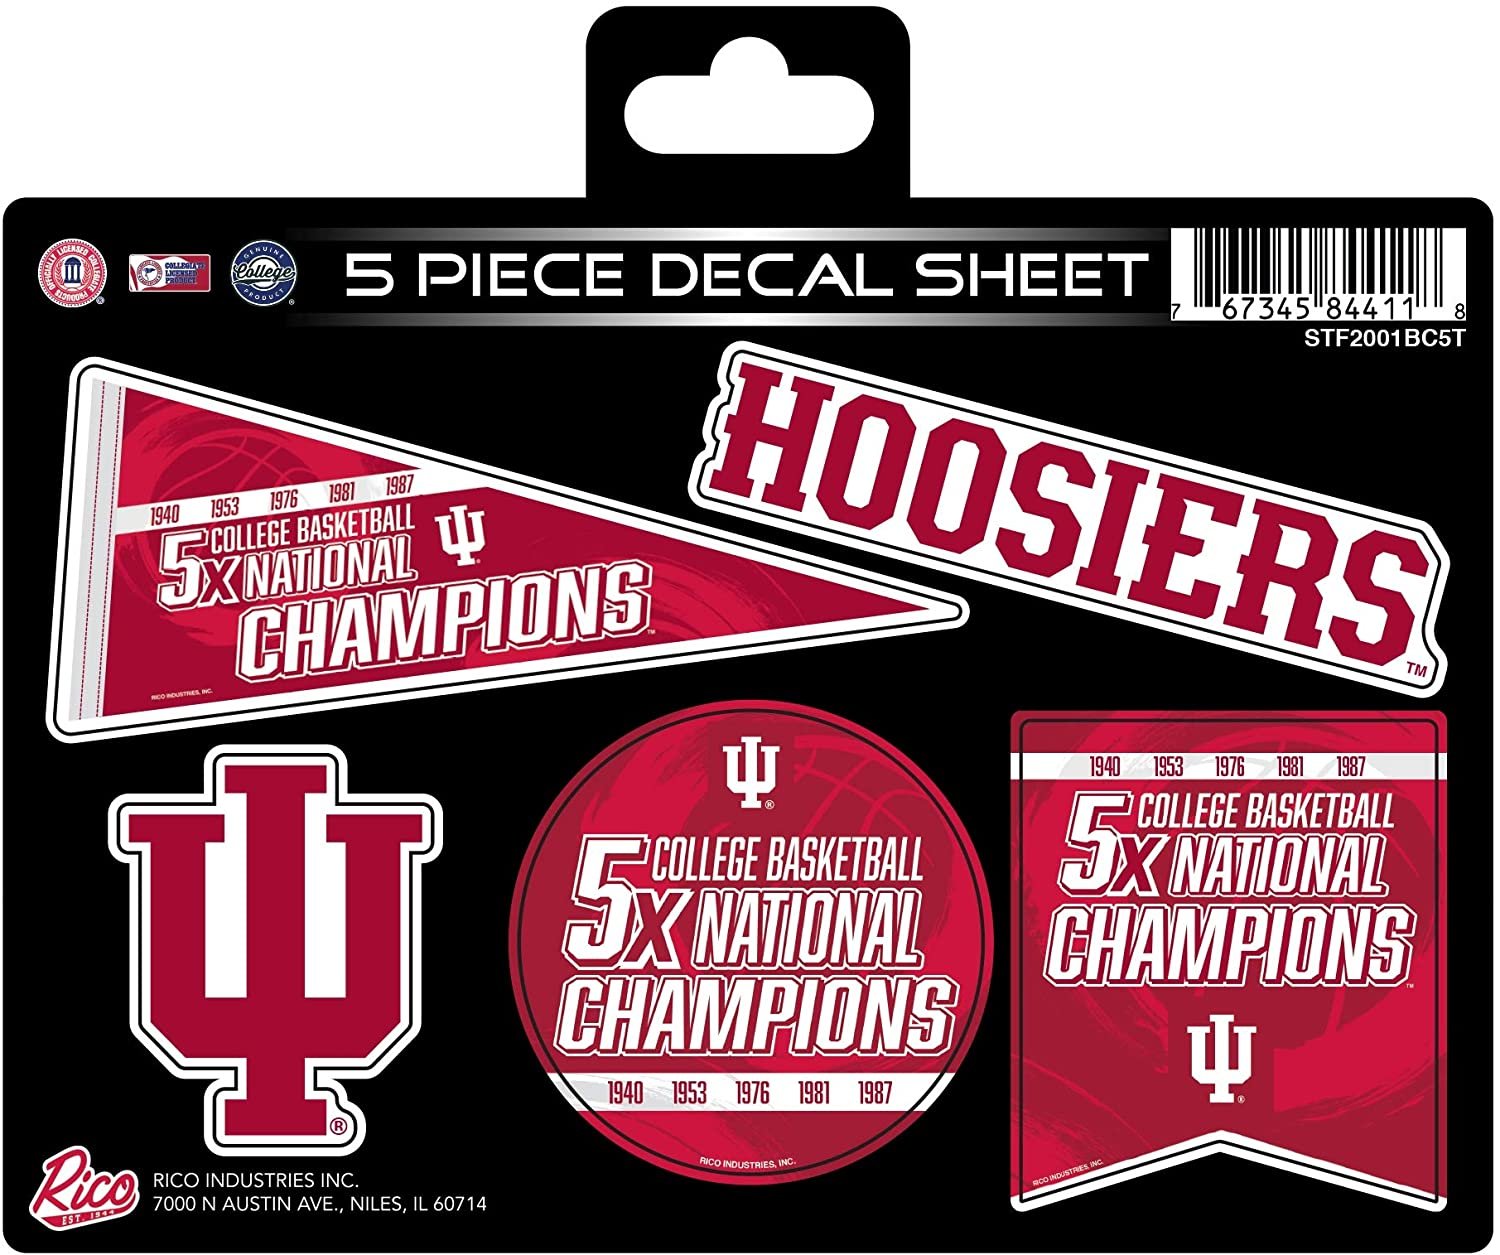 Indiana Hoosiers Decal Sticker 5X Time Champions College Basketball 5 Piece Multi Sheet Flat Vinyl Emblem University